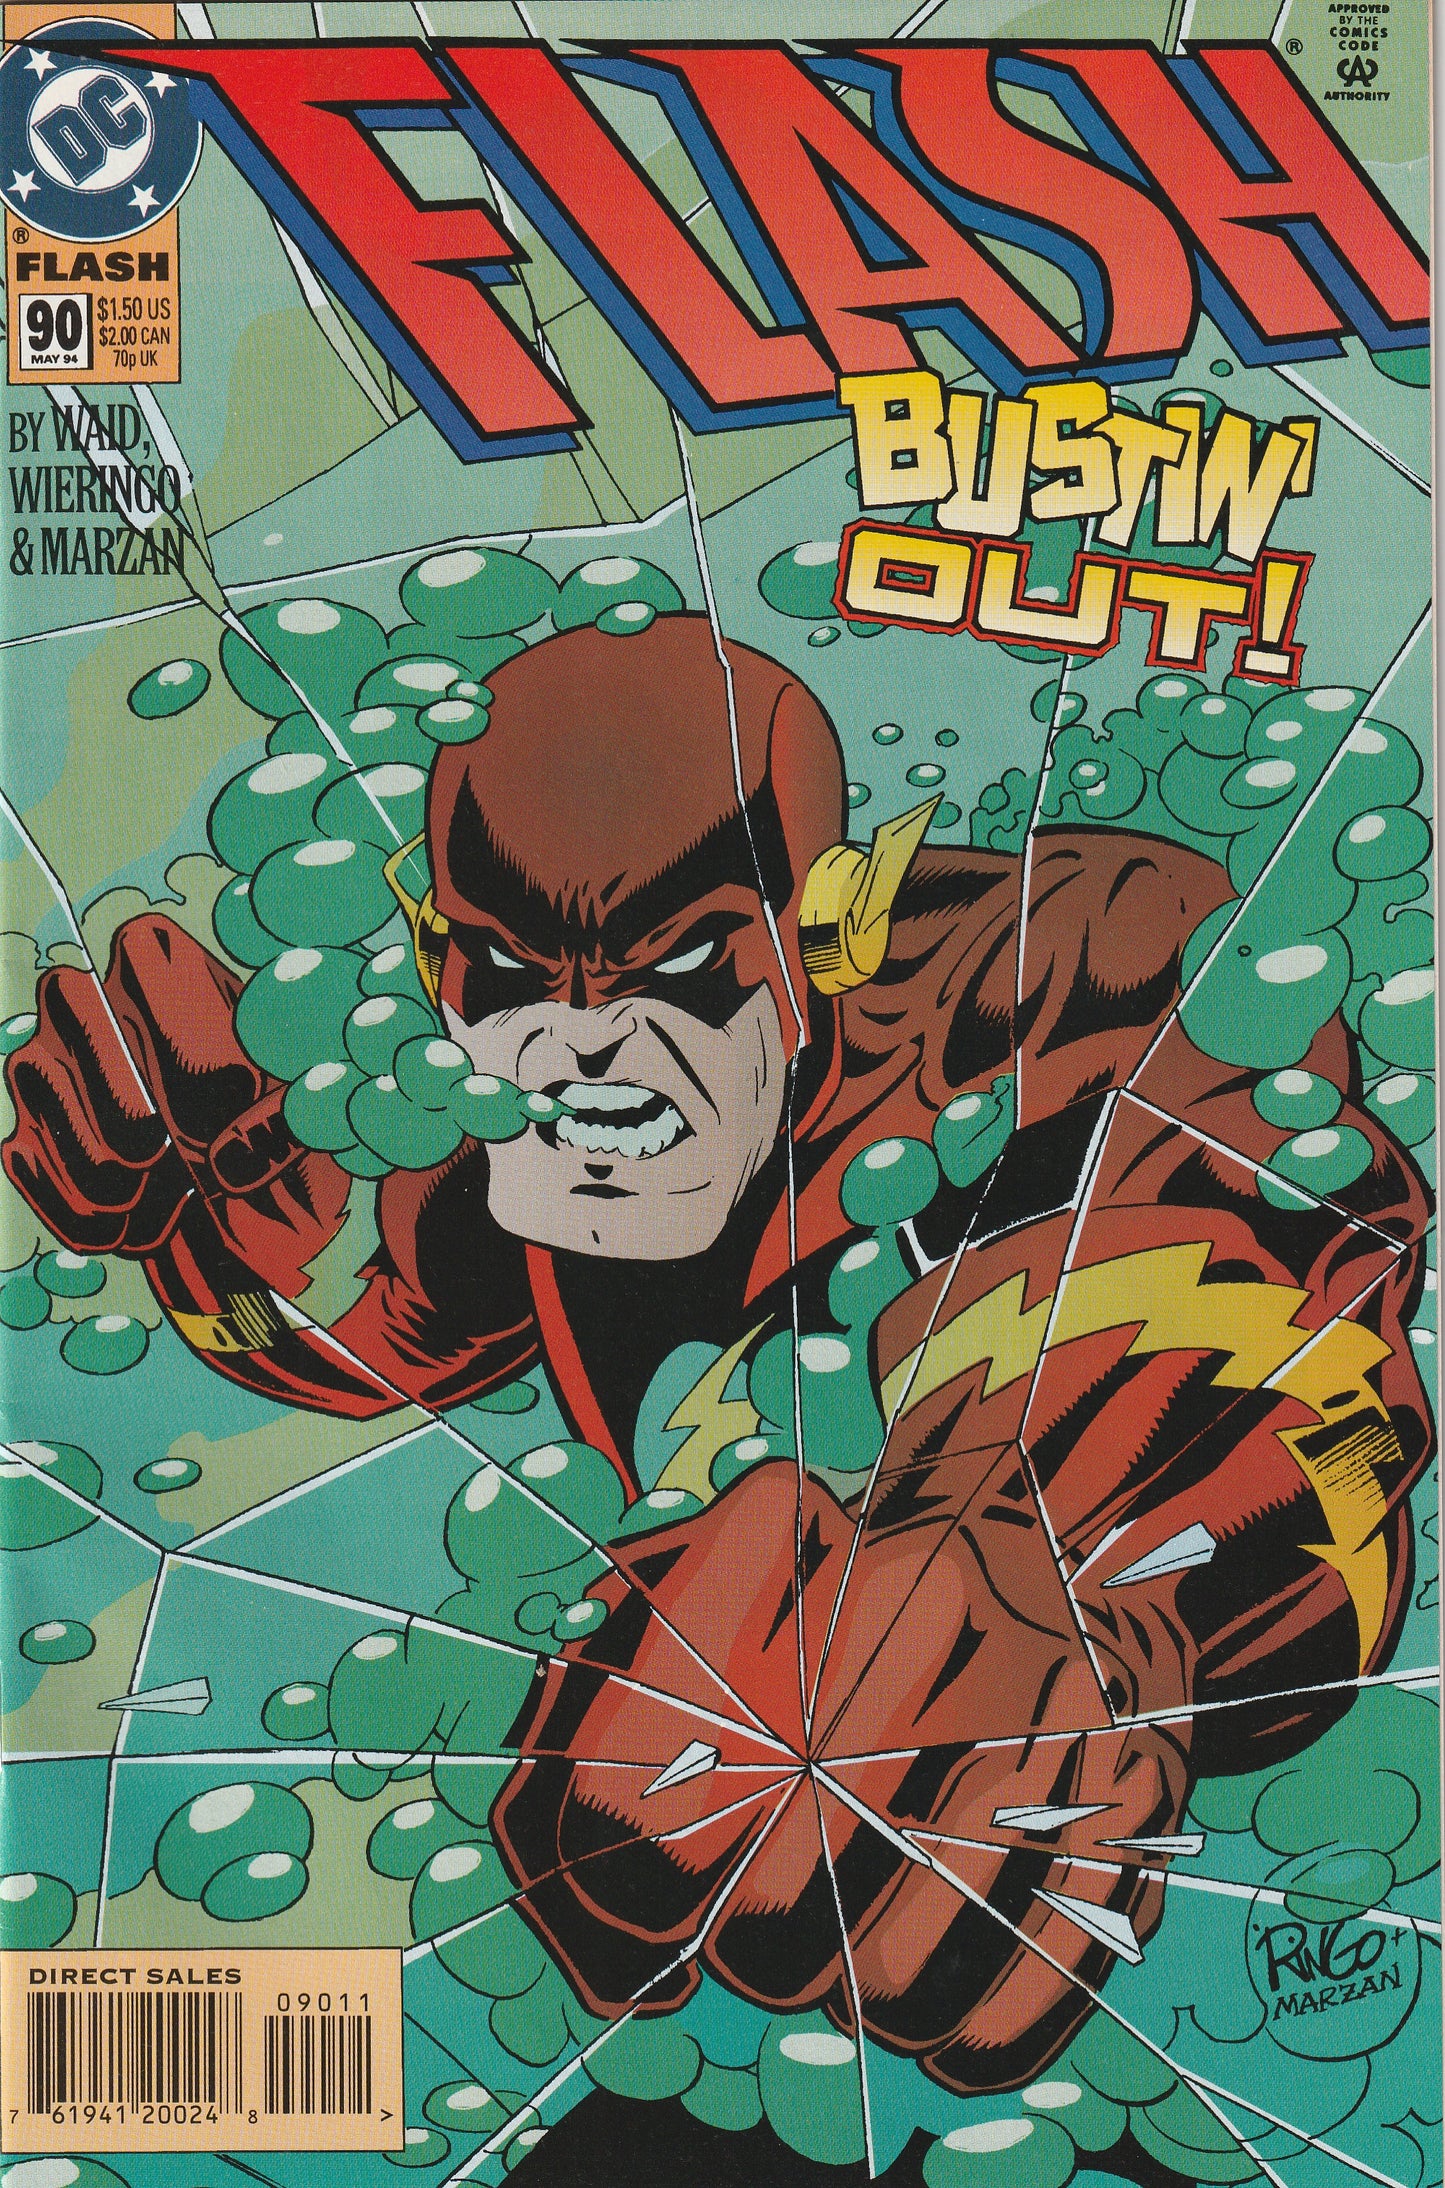 Flash #90 (Volume 2, 1994)